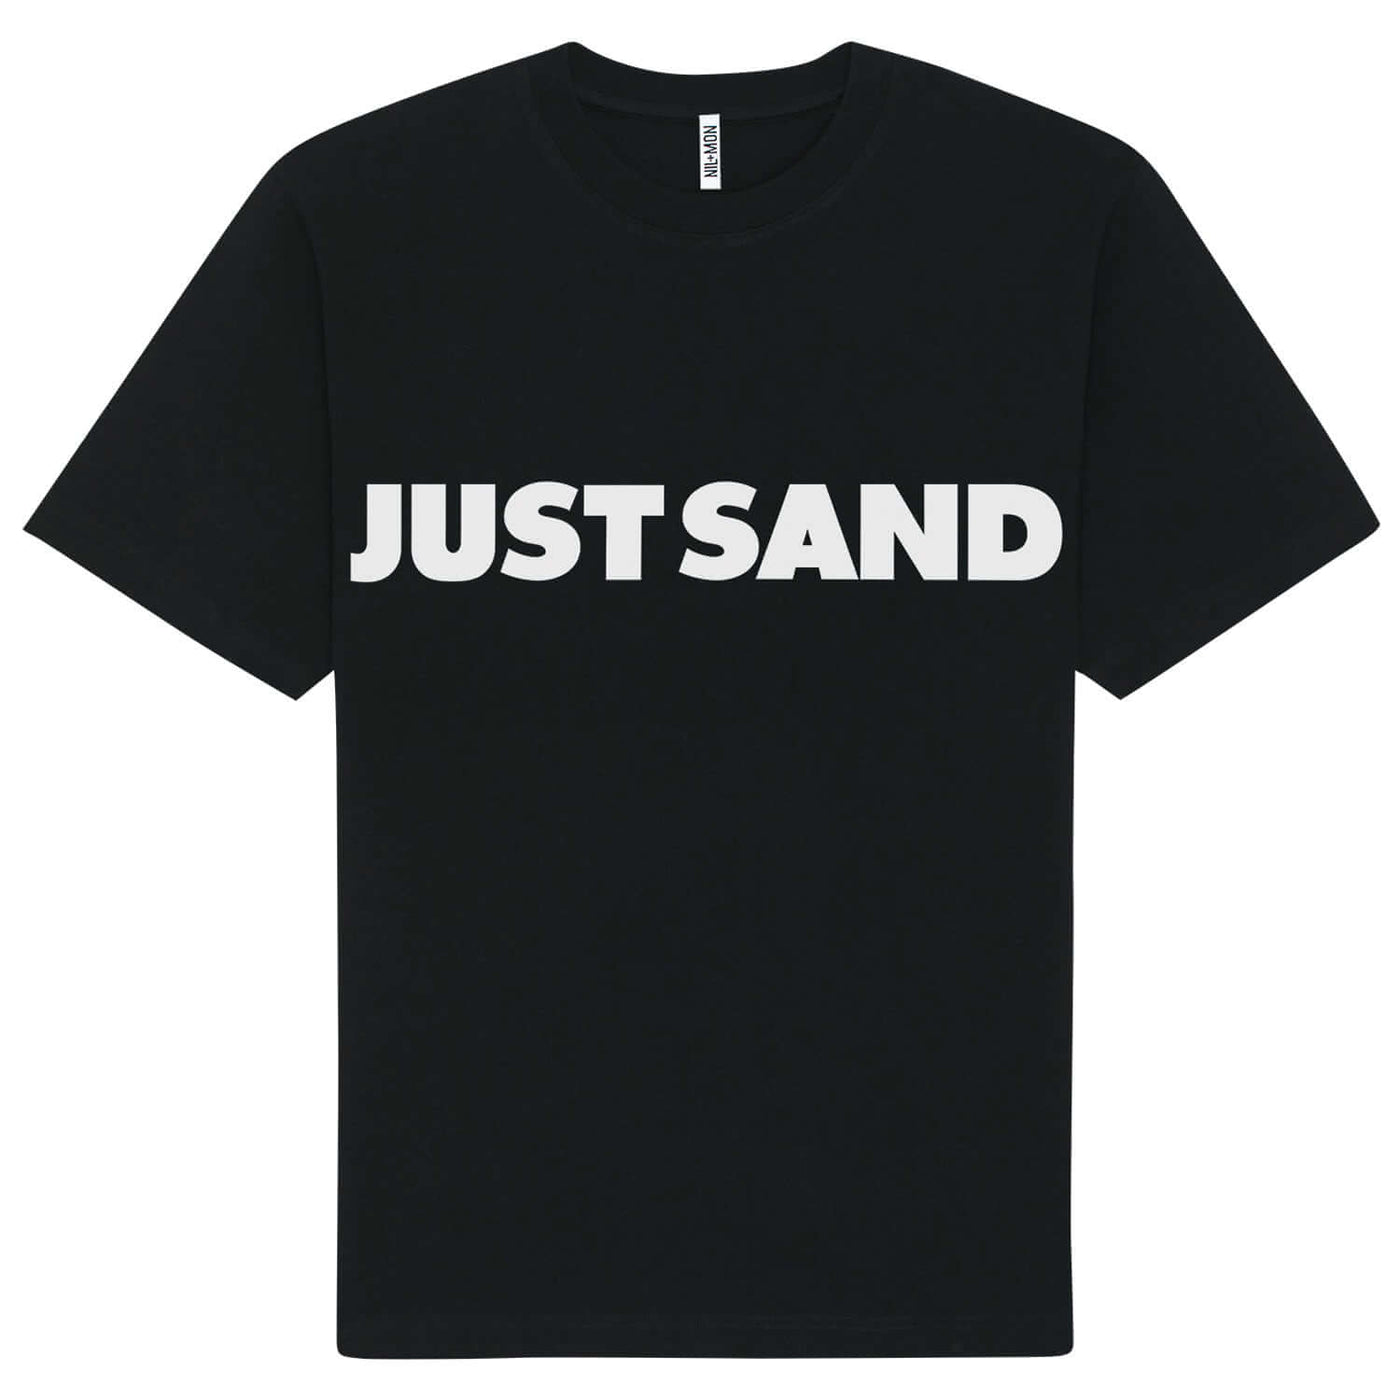 XXL Beach Shirt "Just Sand" - black